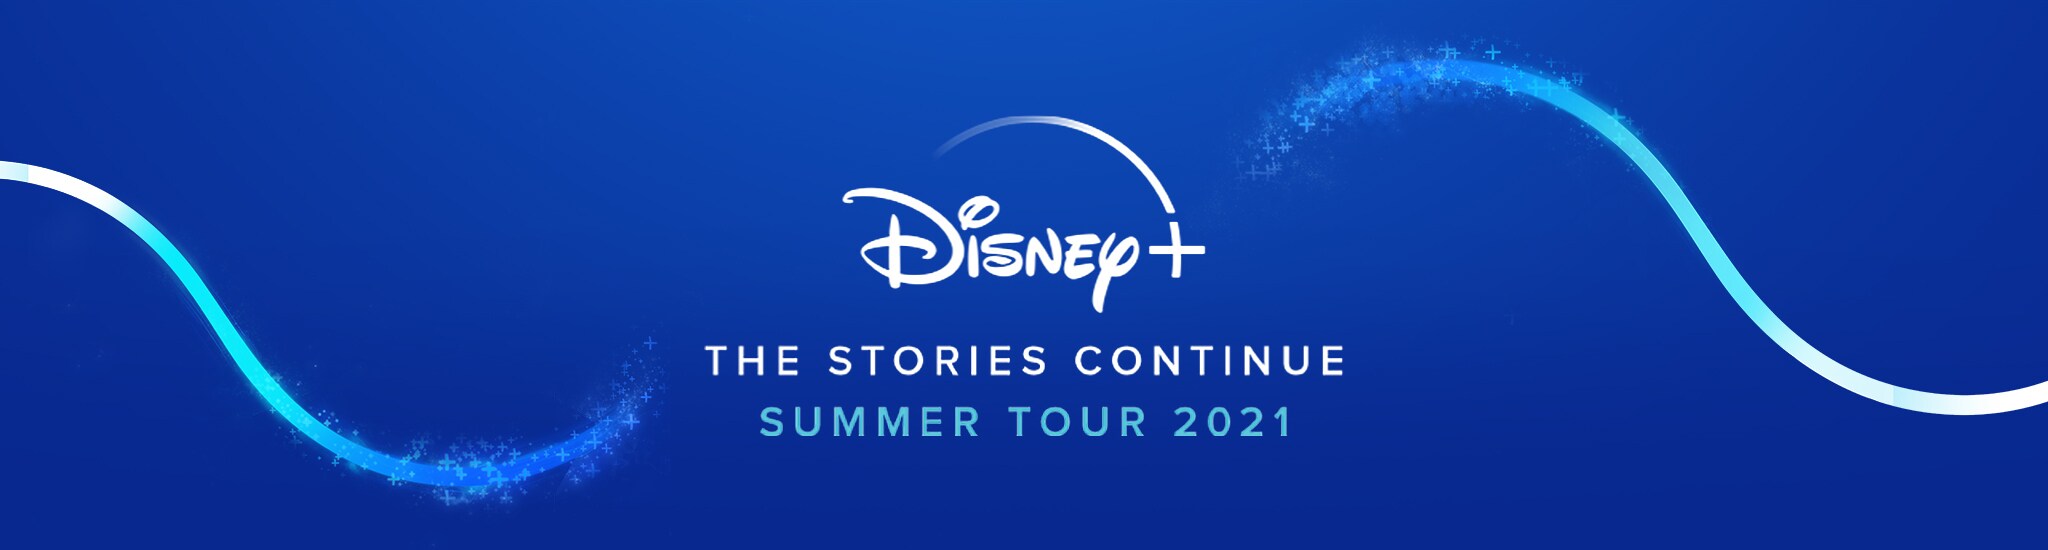 Disney+ | The Stories Continue | Summer Tour 2021